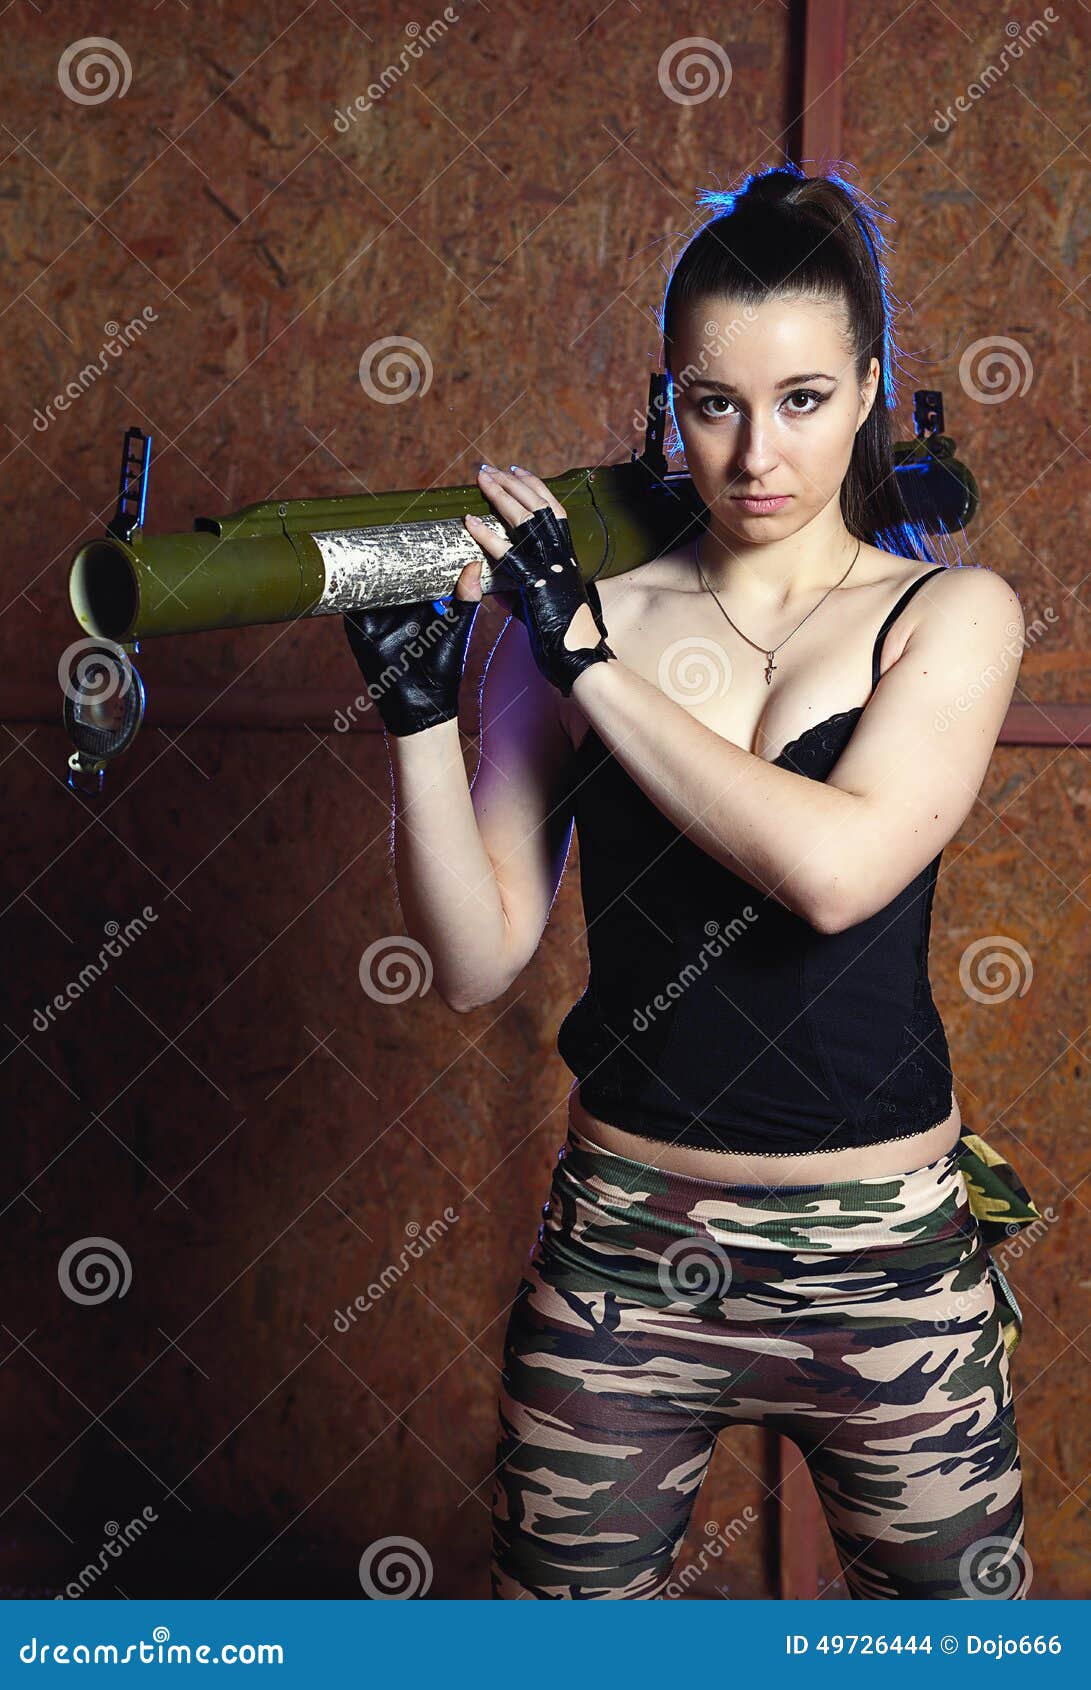 Bella bazooka. Девушка с базукой. Женщина с гранатометом. Девочка с гранатометом. Красивая девушка с гранатометом.